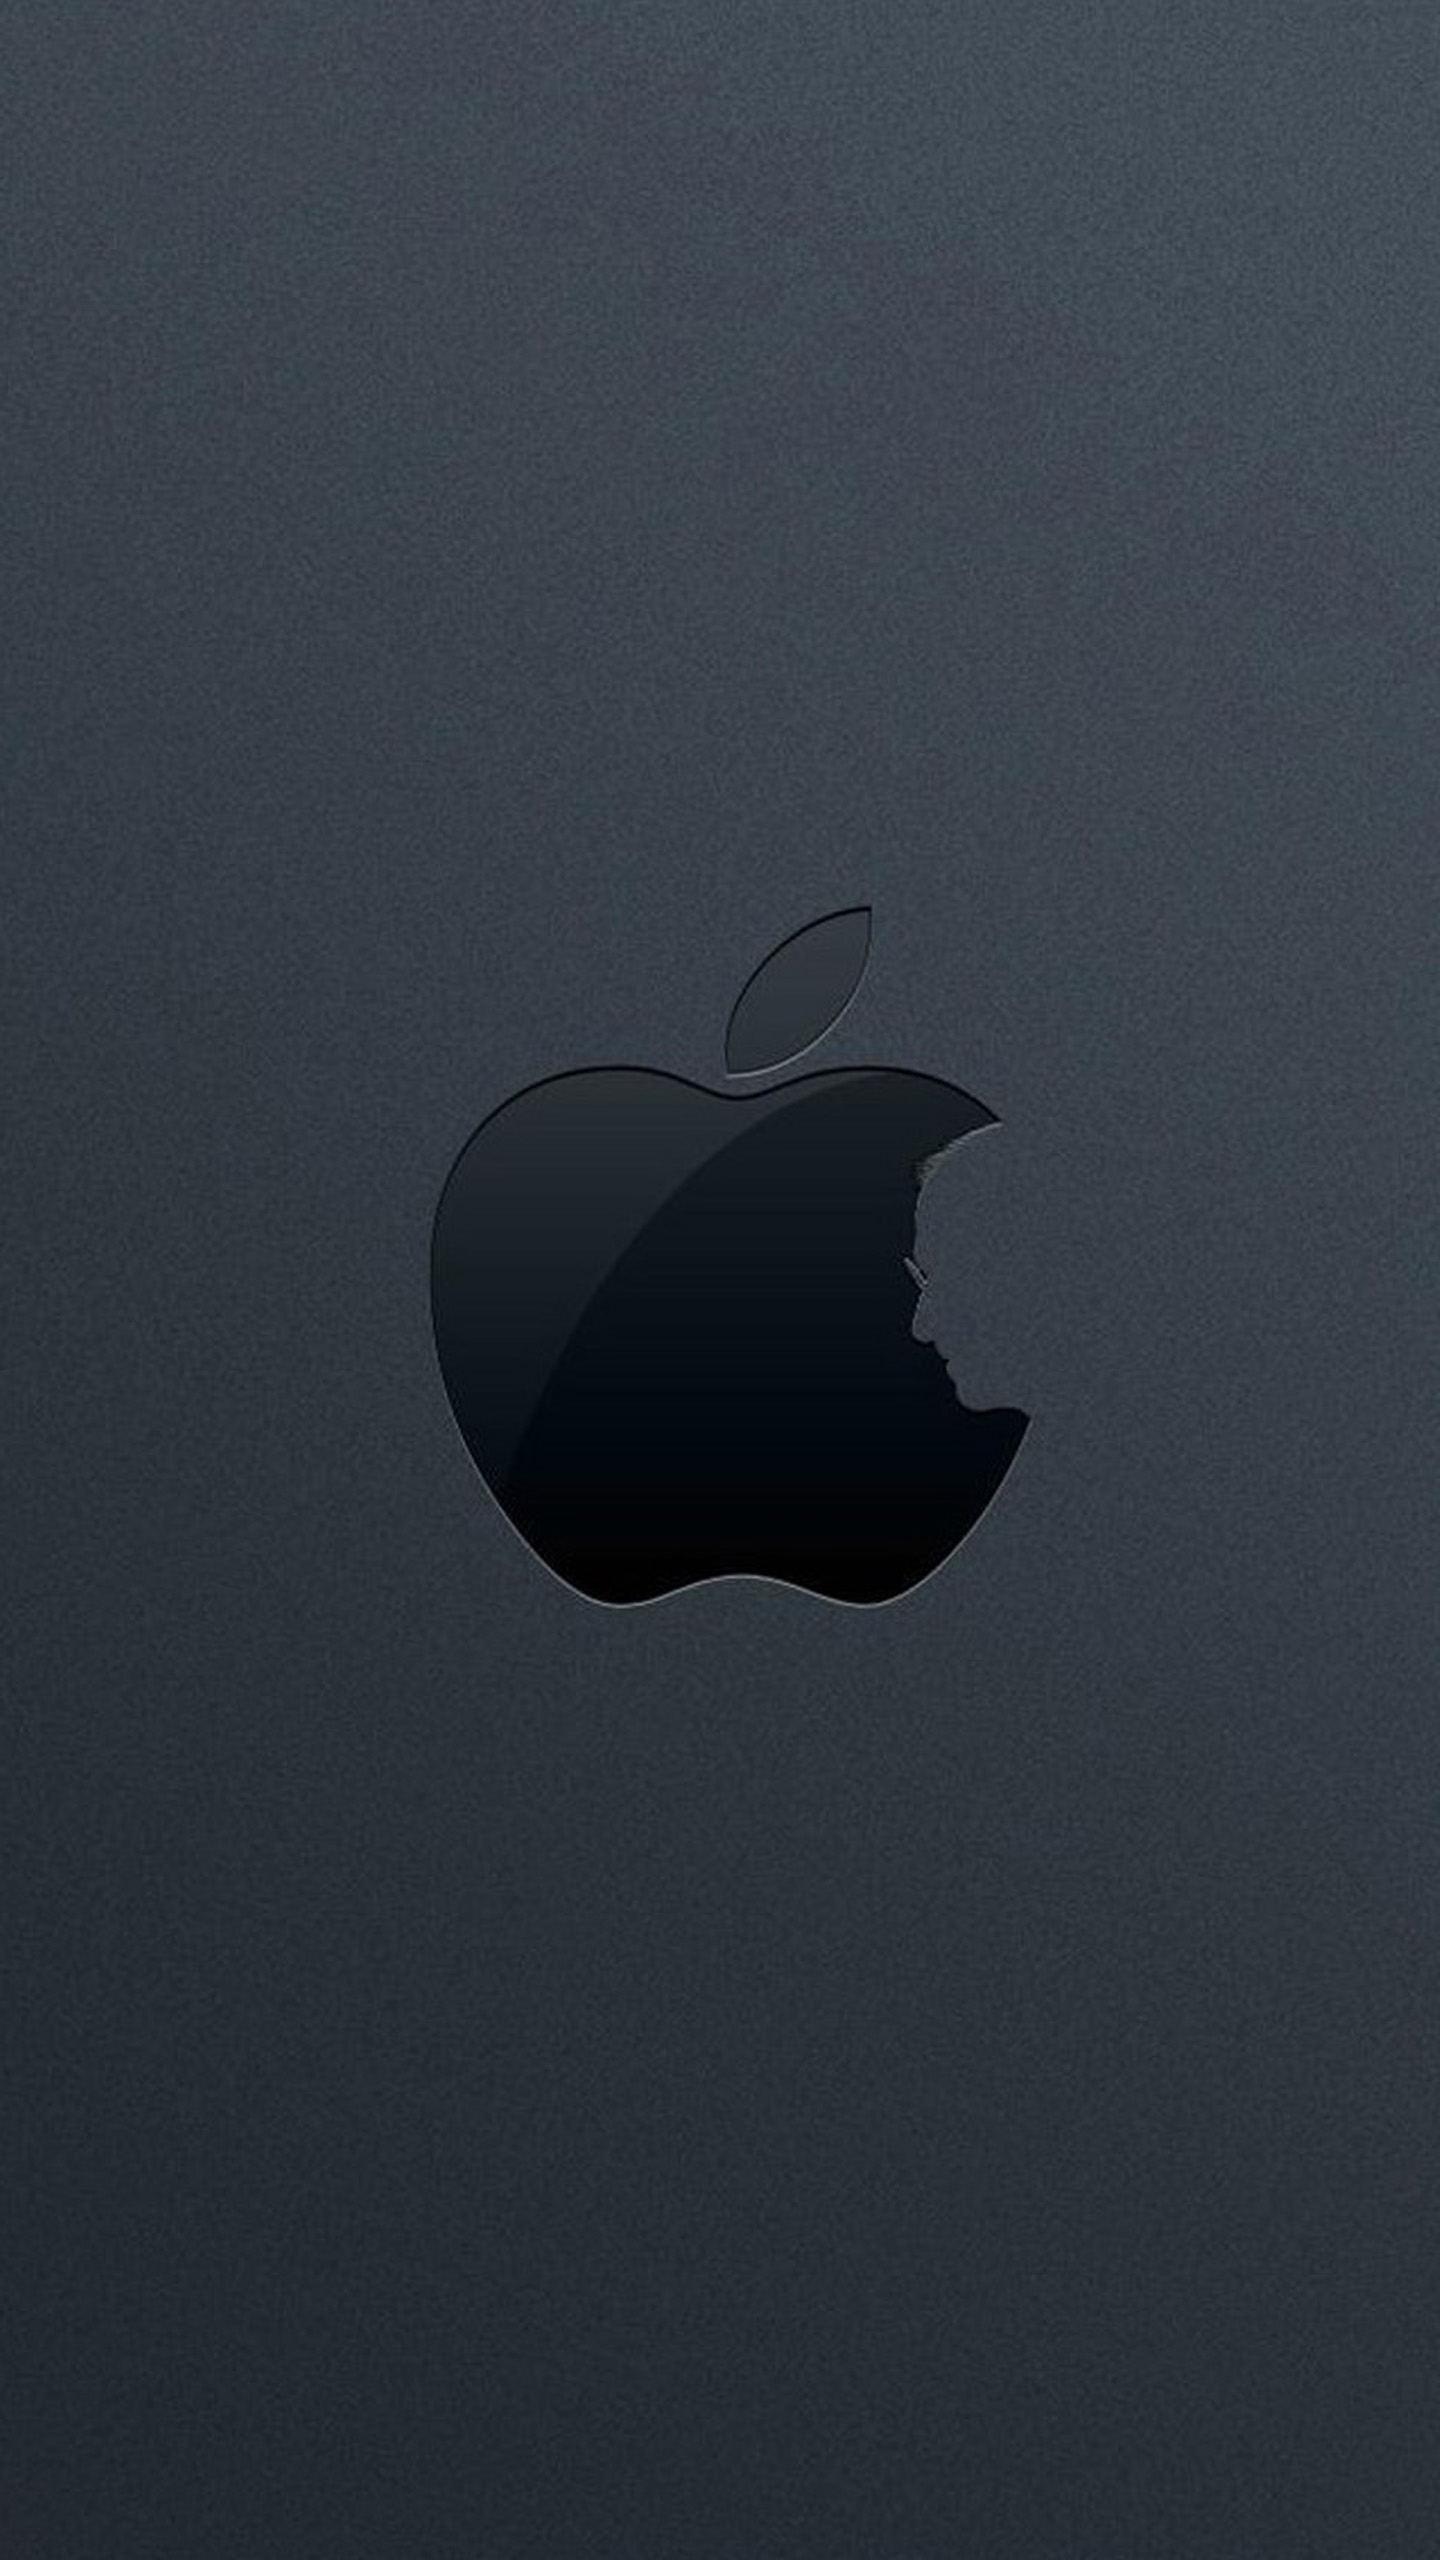 Black Apple logo 5 Galaxy S6 Wallpaper | Galaxy S6 Wallpapers